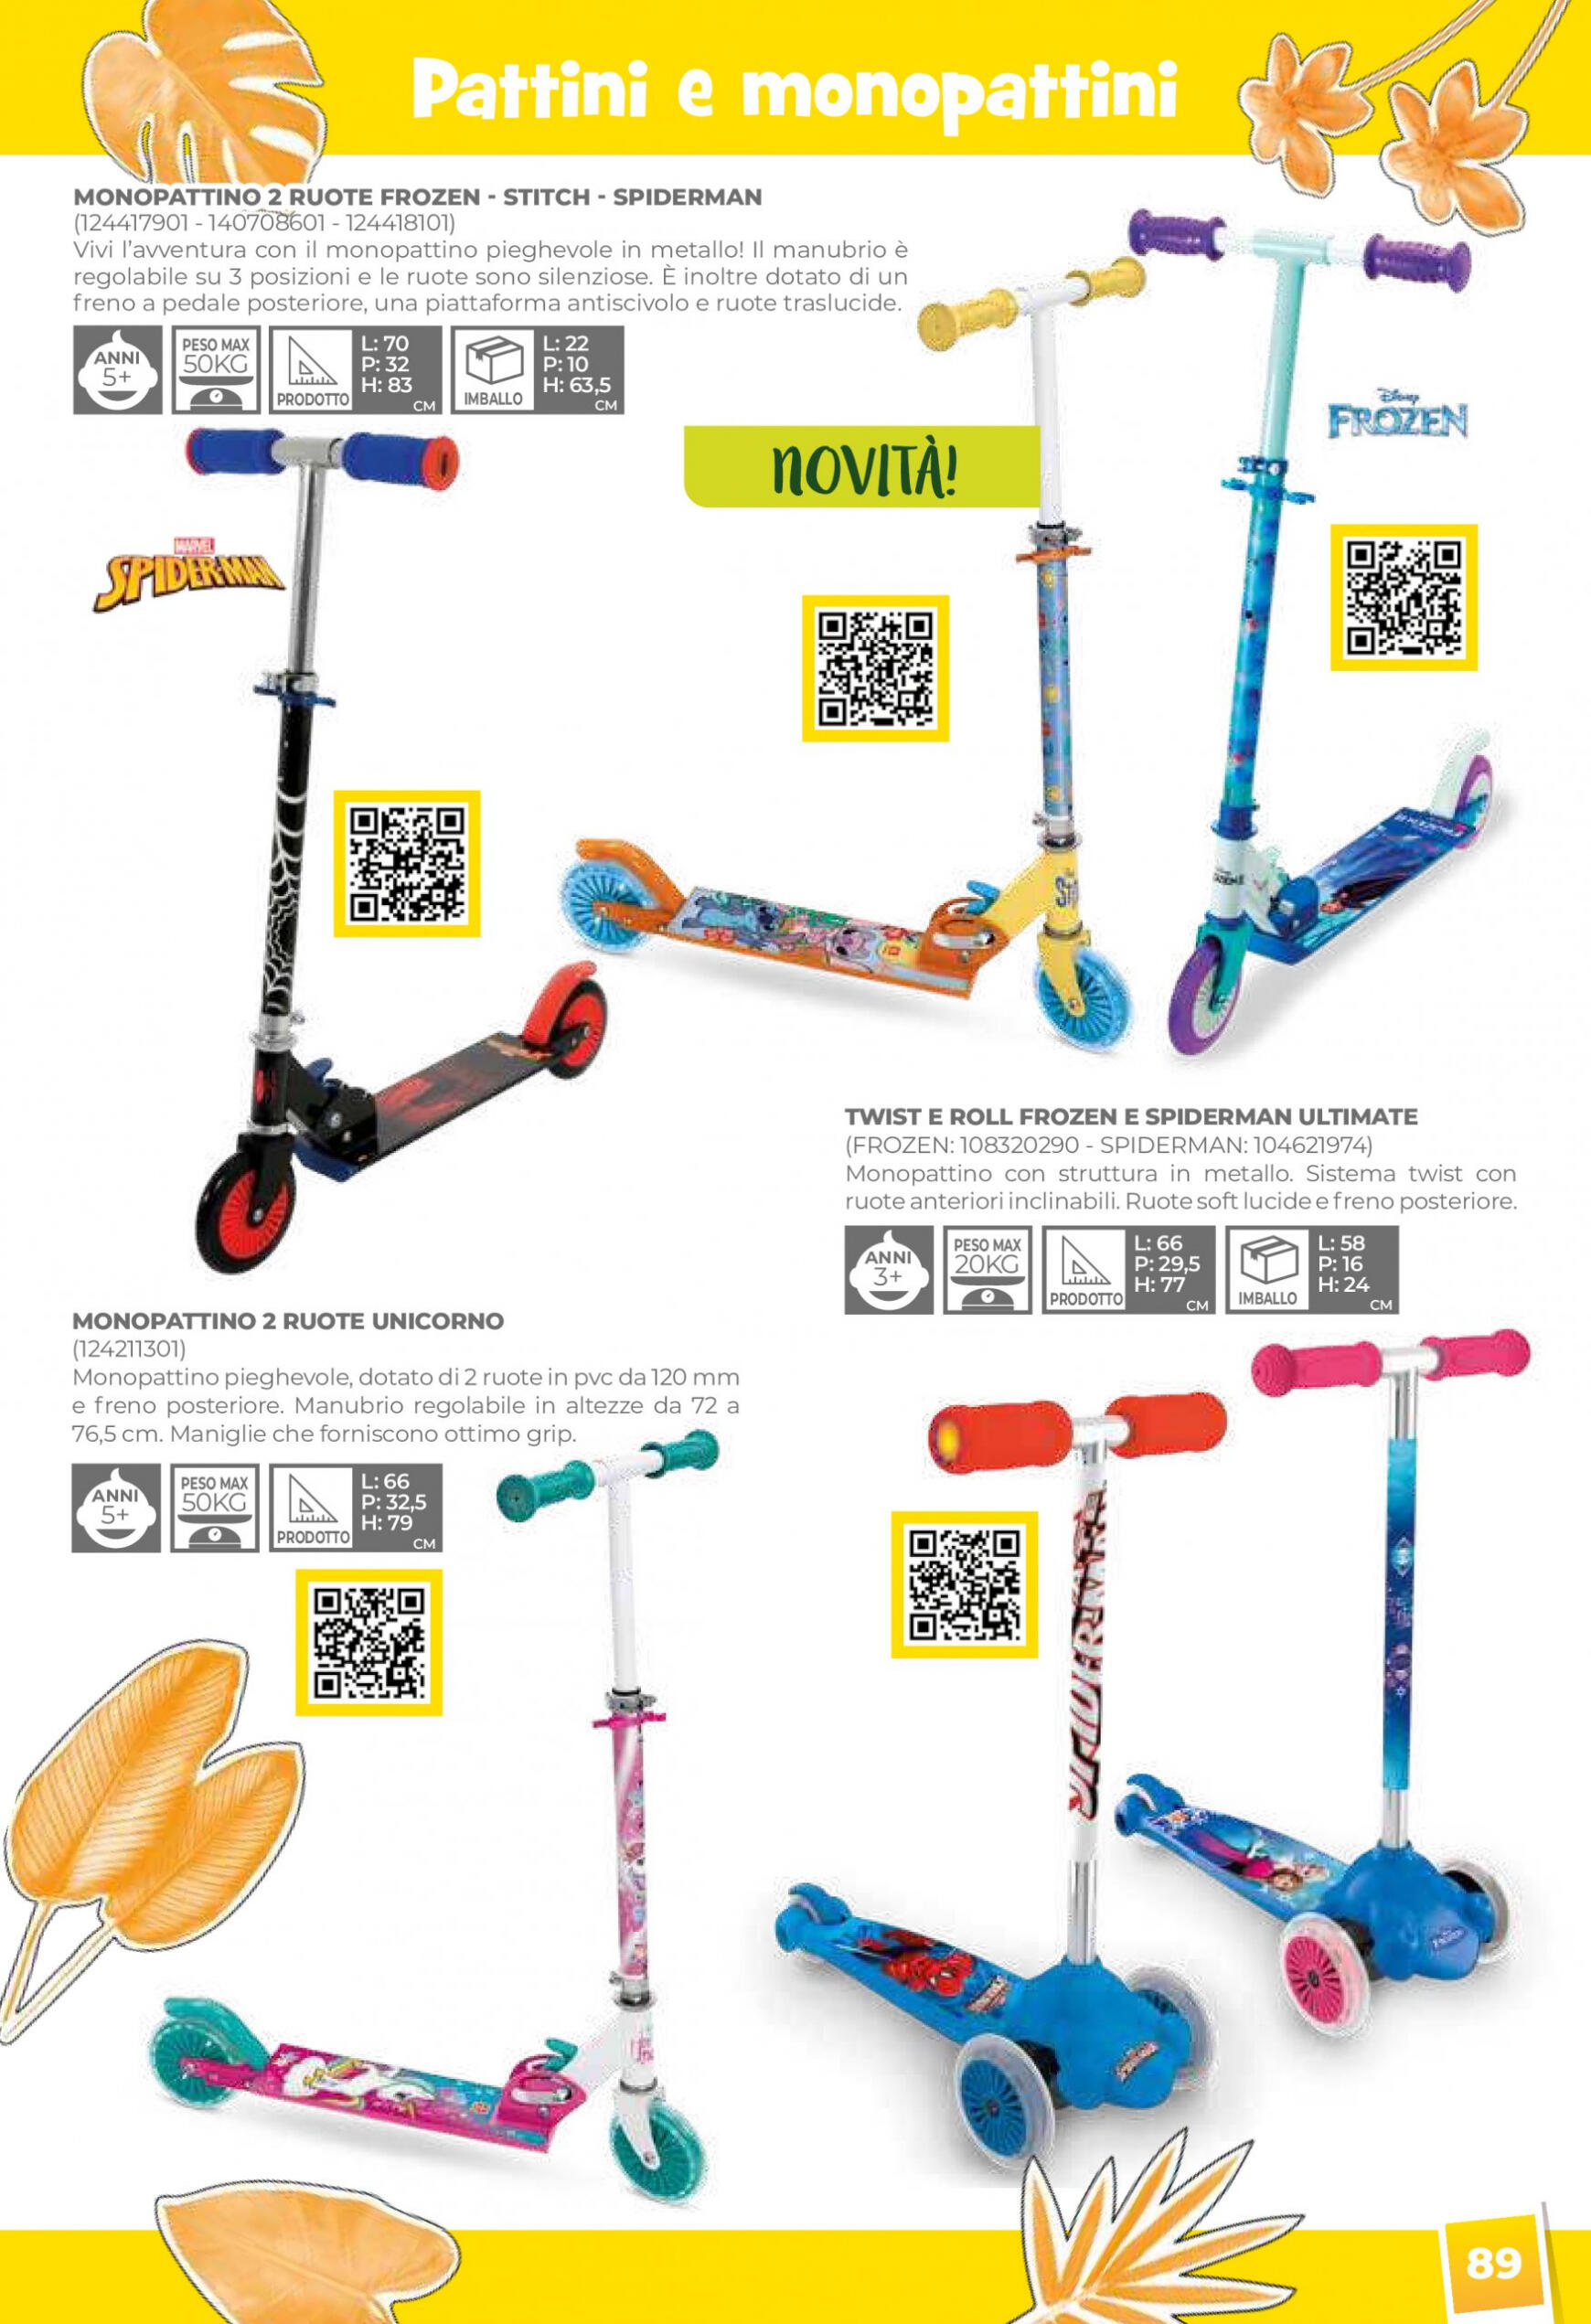 toys-center - Nuovo volantino Toys Center 01.05. - 31.12. - page: 91